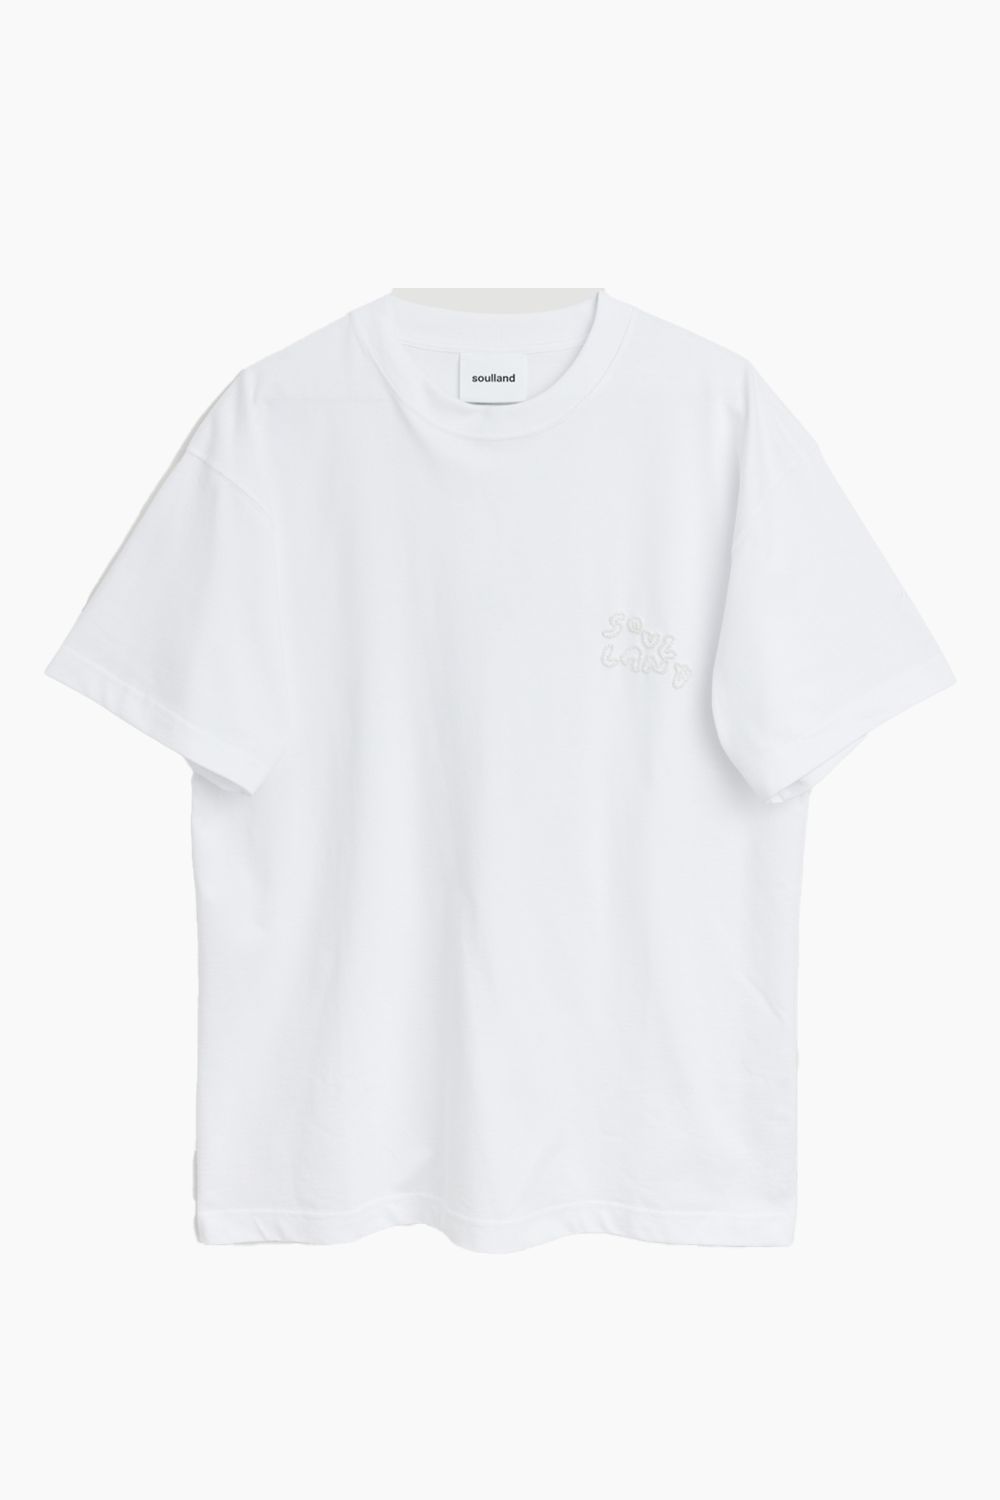 Se Kai T-shirt Beaded Logo - White - Soulland - Hvid S/M hos QNTS.dk